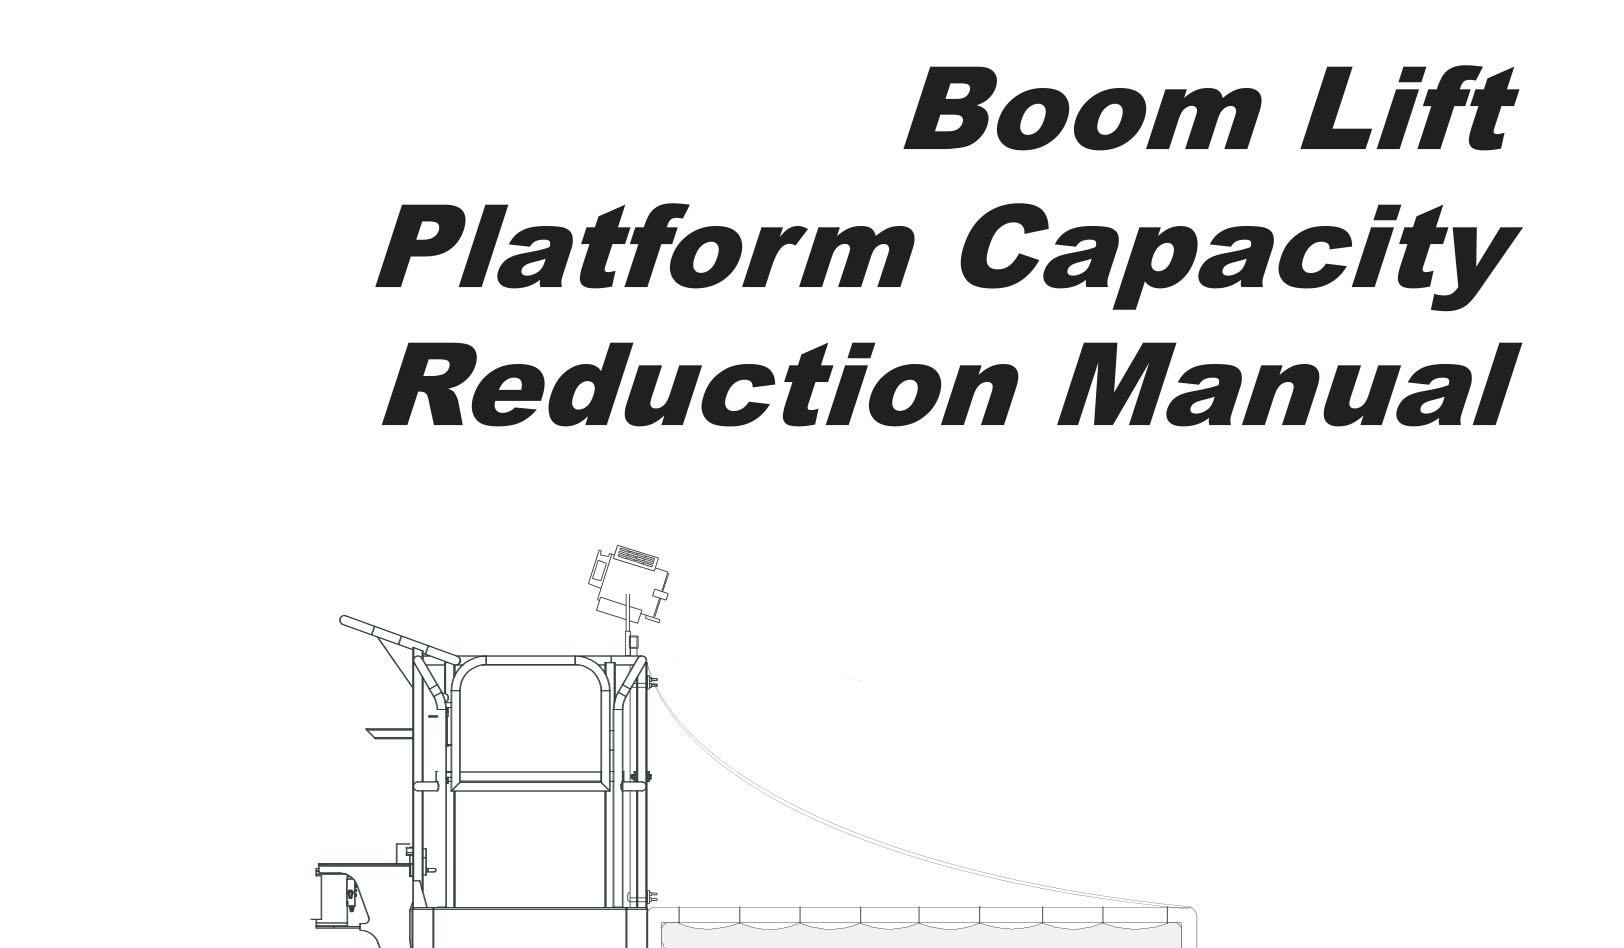 Boom lift platform capacity reduction manual